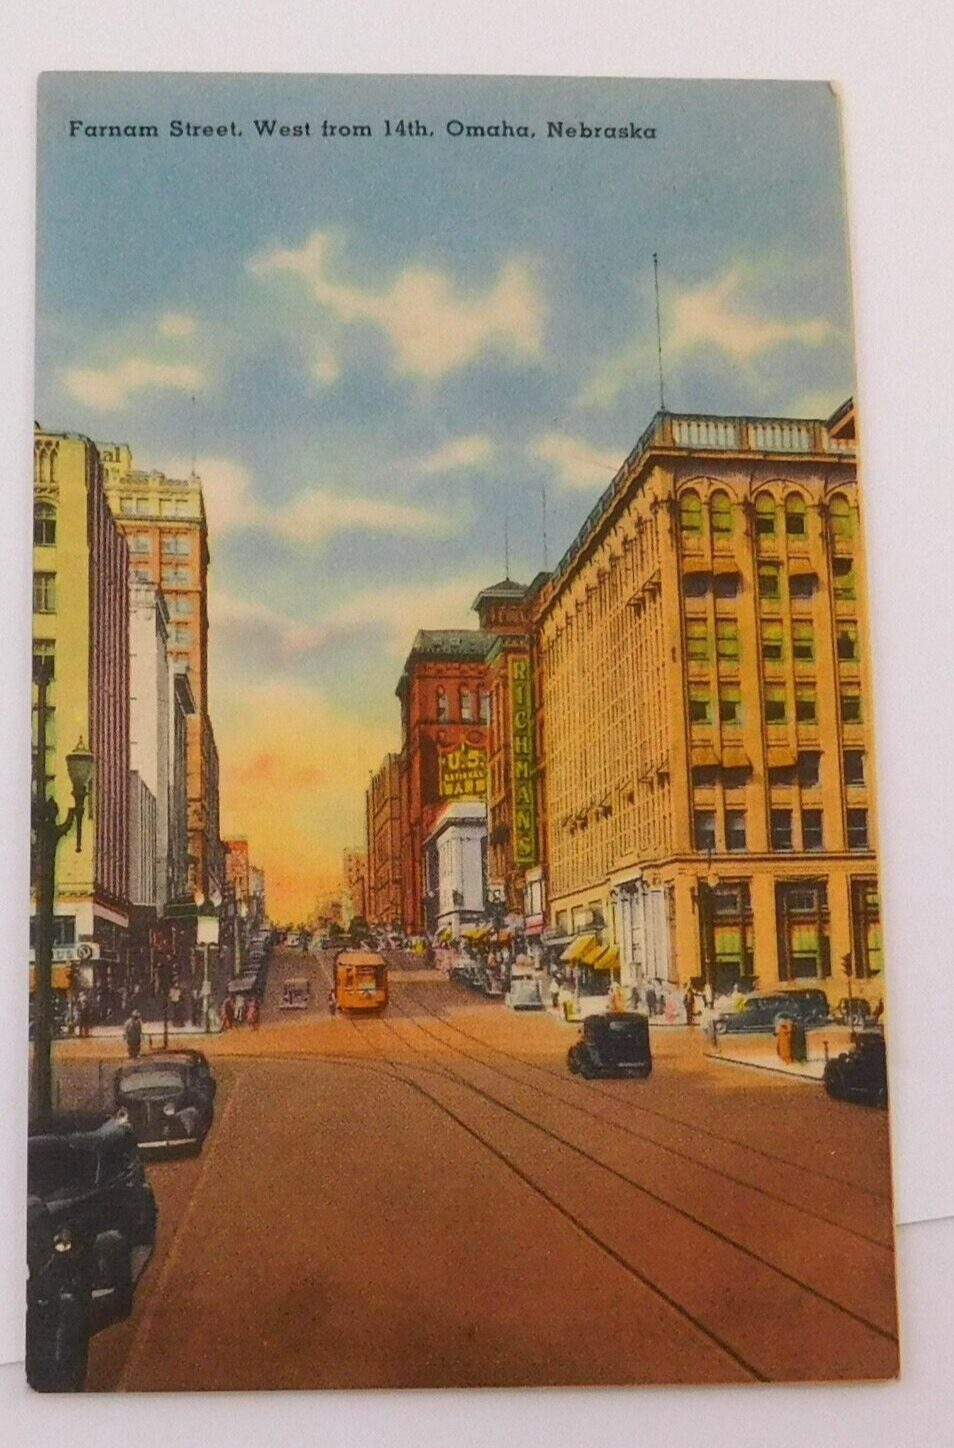 Farnam Street, West from 14th Street Omaha, Nebraska VTG Linen Postcard 1951